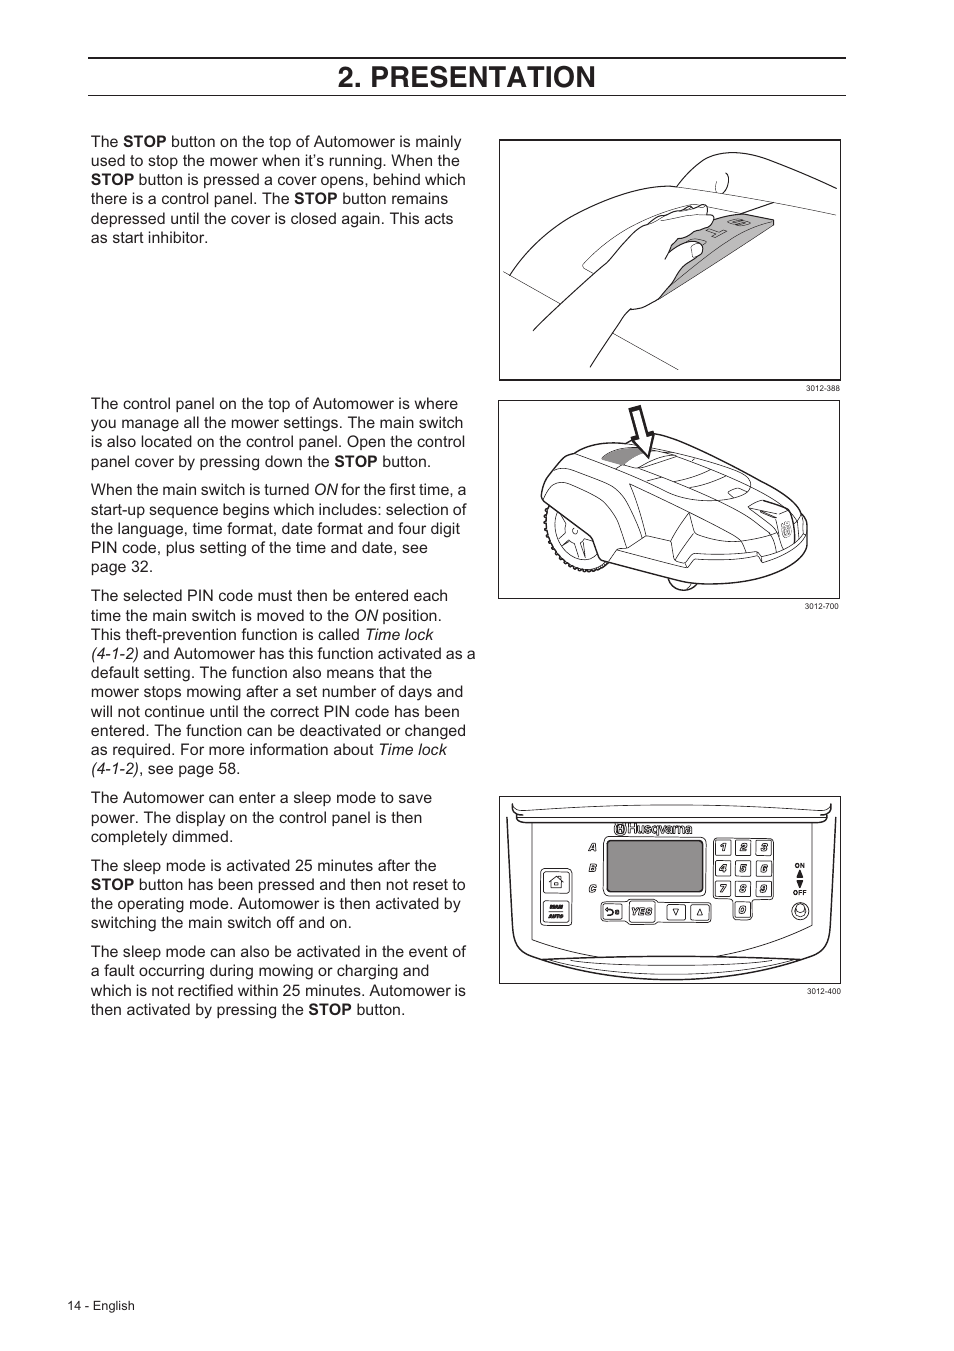 Presentation | Husqvarna 220 AC User Manual | Page 13 / 82